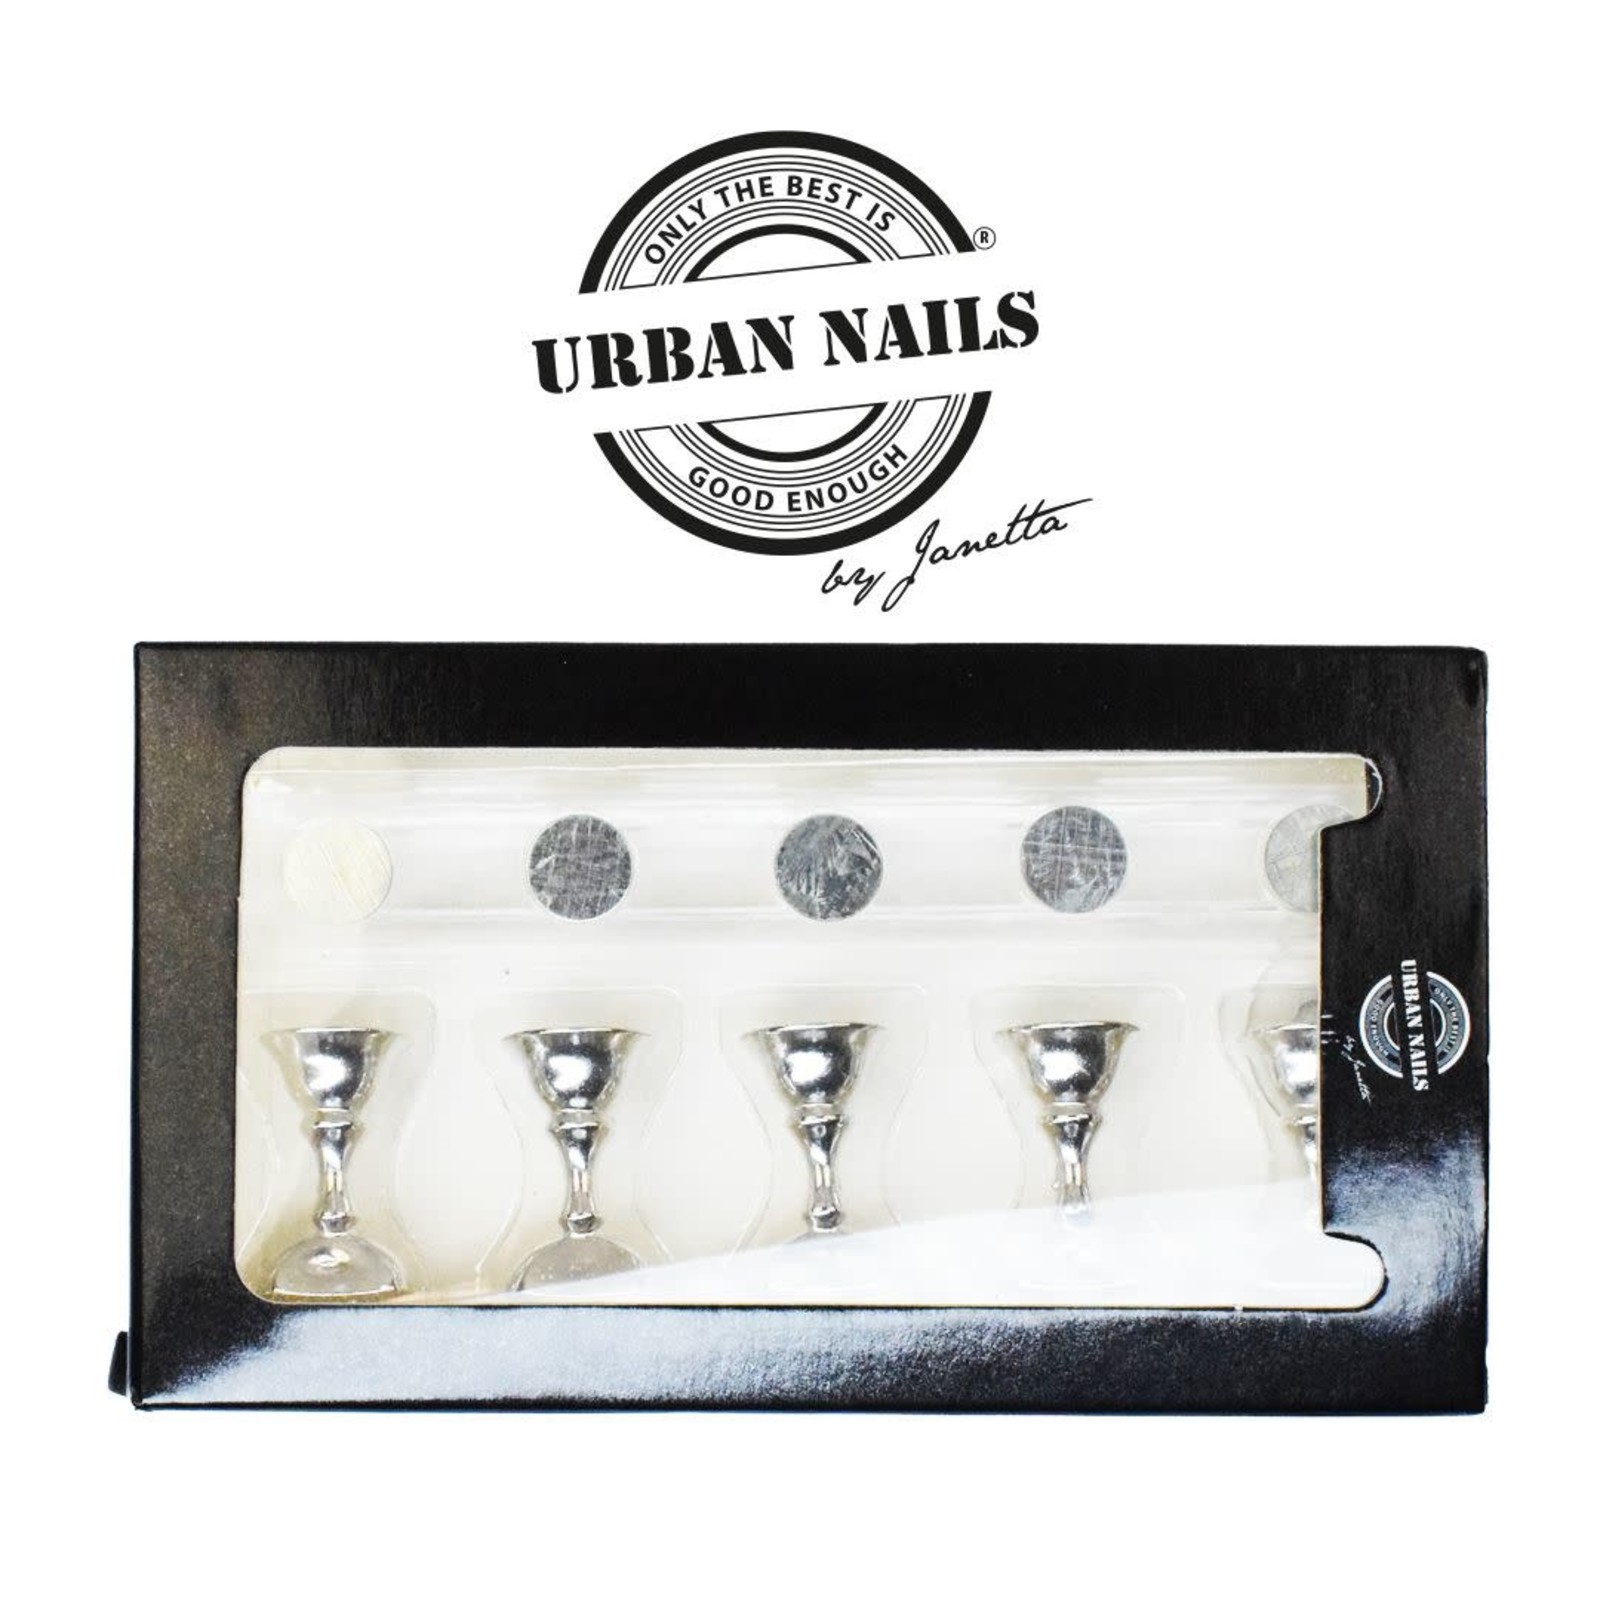 Urban nails Zilveren Tip Houder